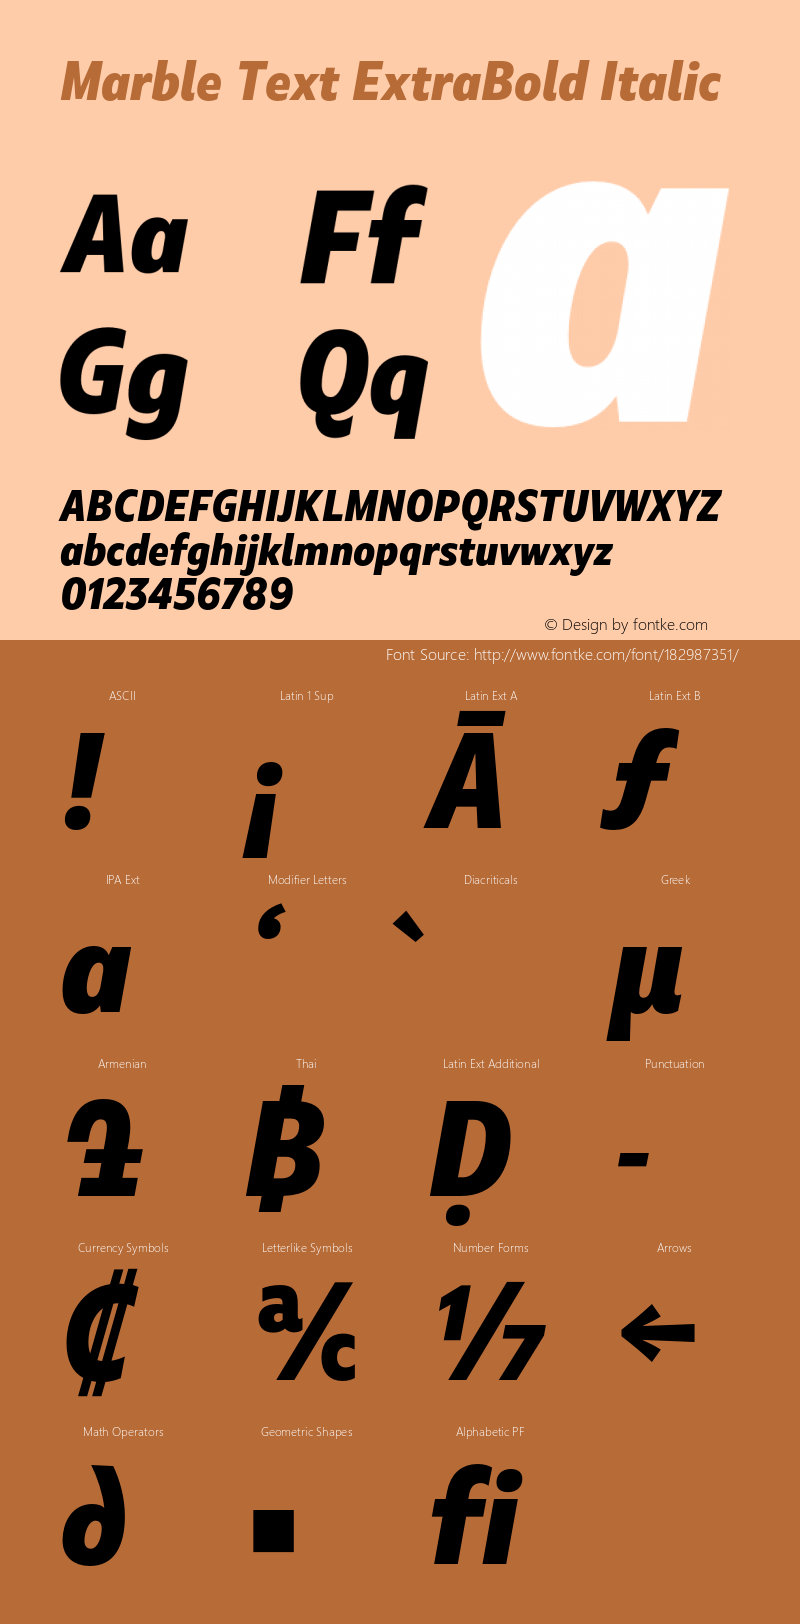 Marble Text ExtraBold Italic Version 1.001图片样张